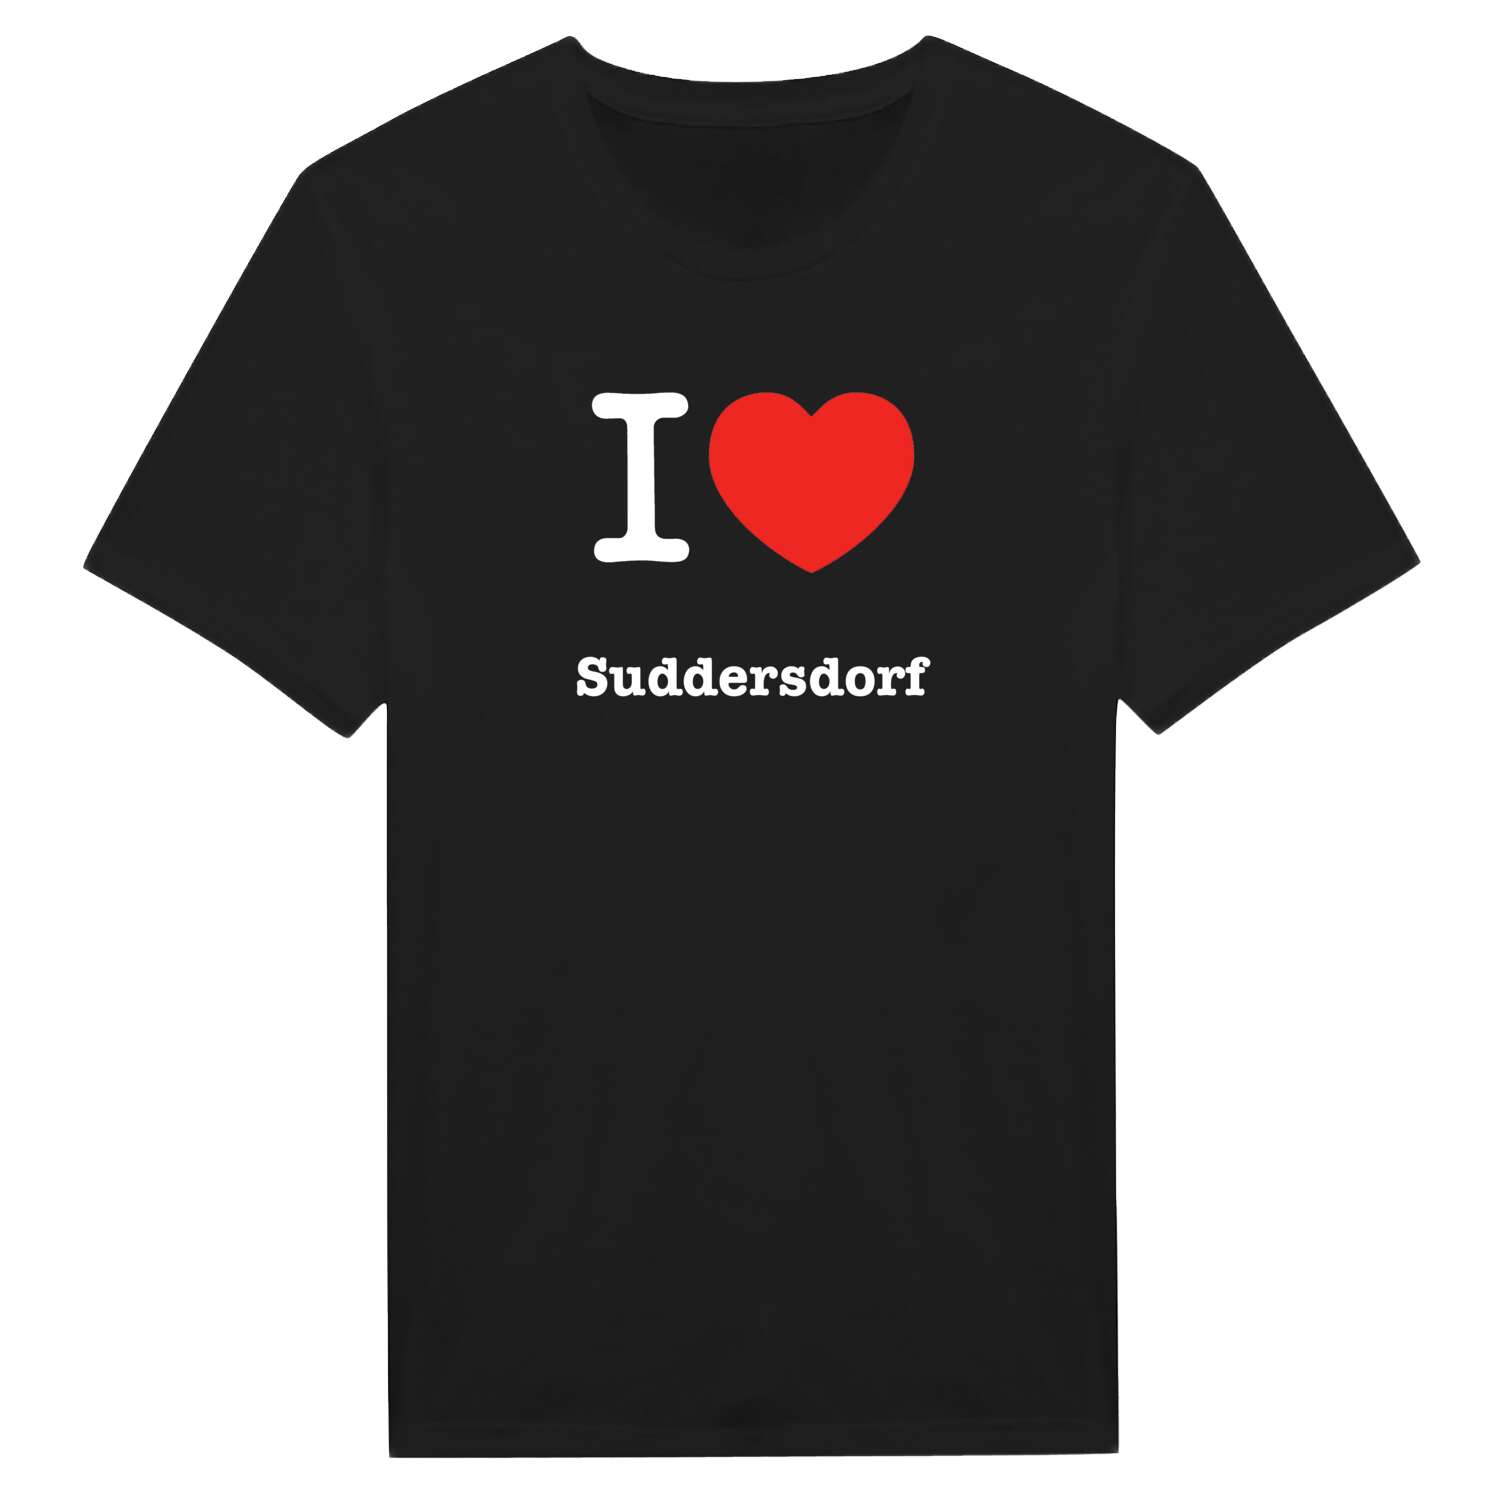 Suddersdorf T-Shirt »I love«